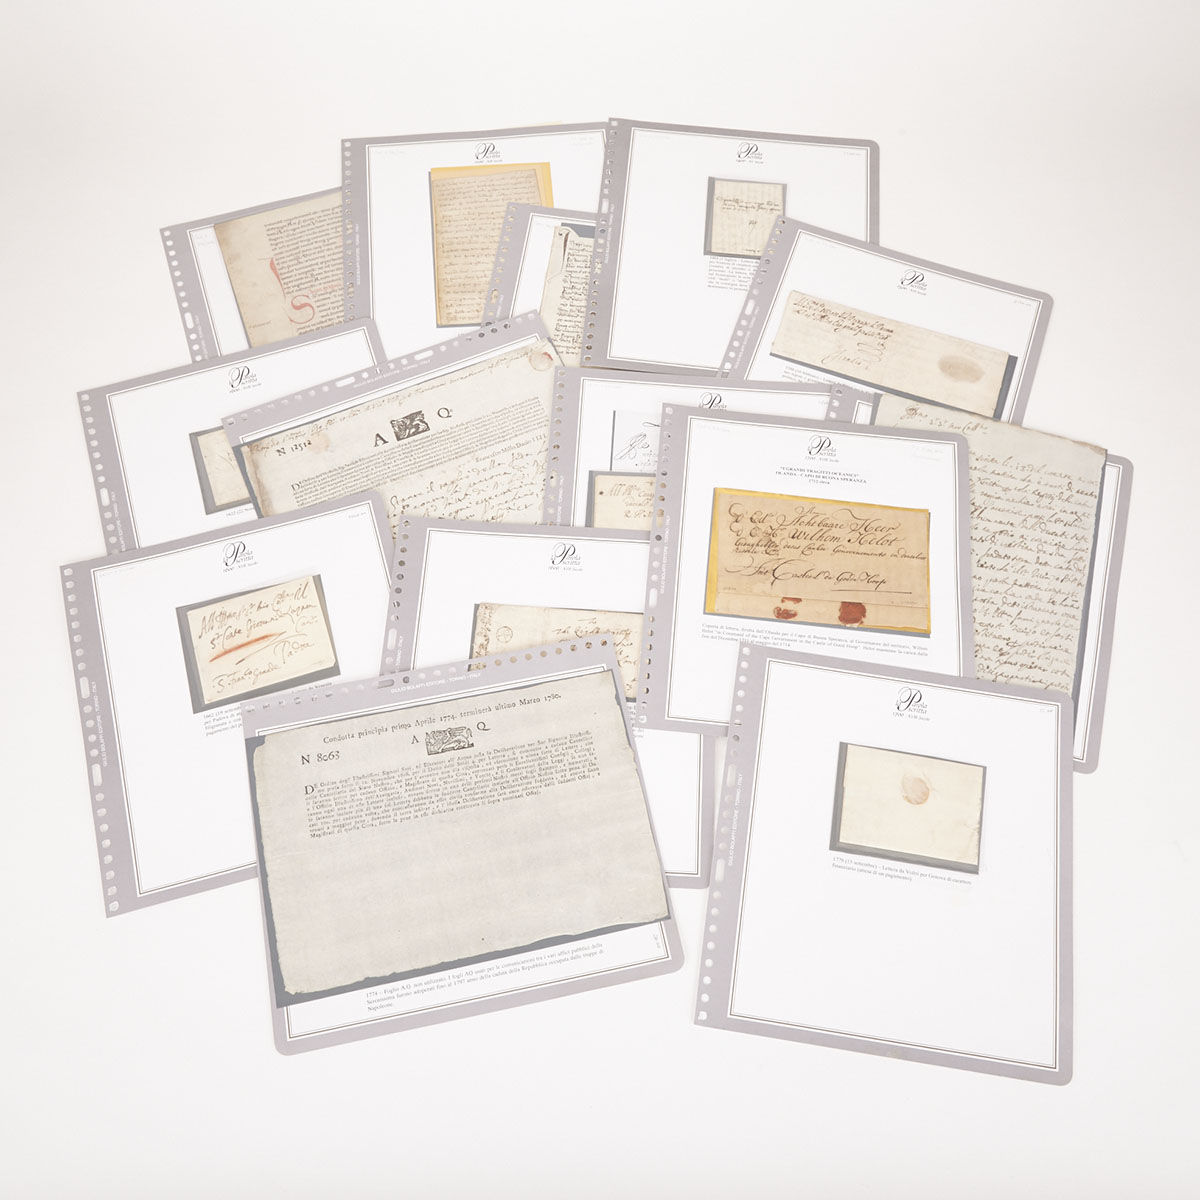 La Parola Scritta: Boxed Album of Fourteen Mostly Italian Documents, 12th Century to 18th Century